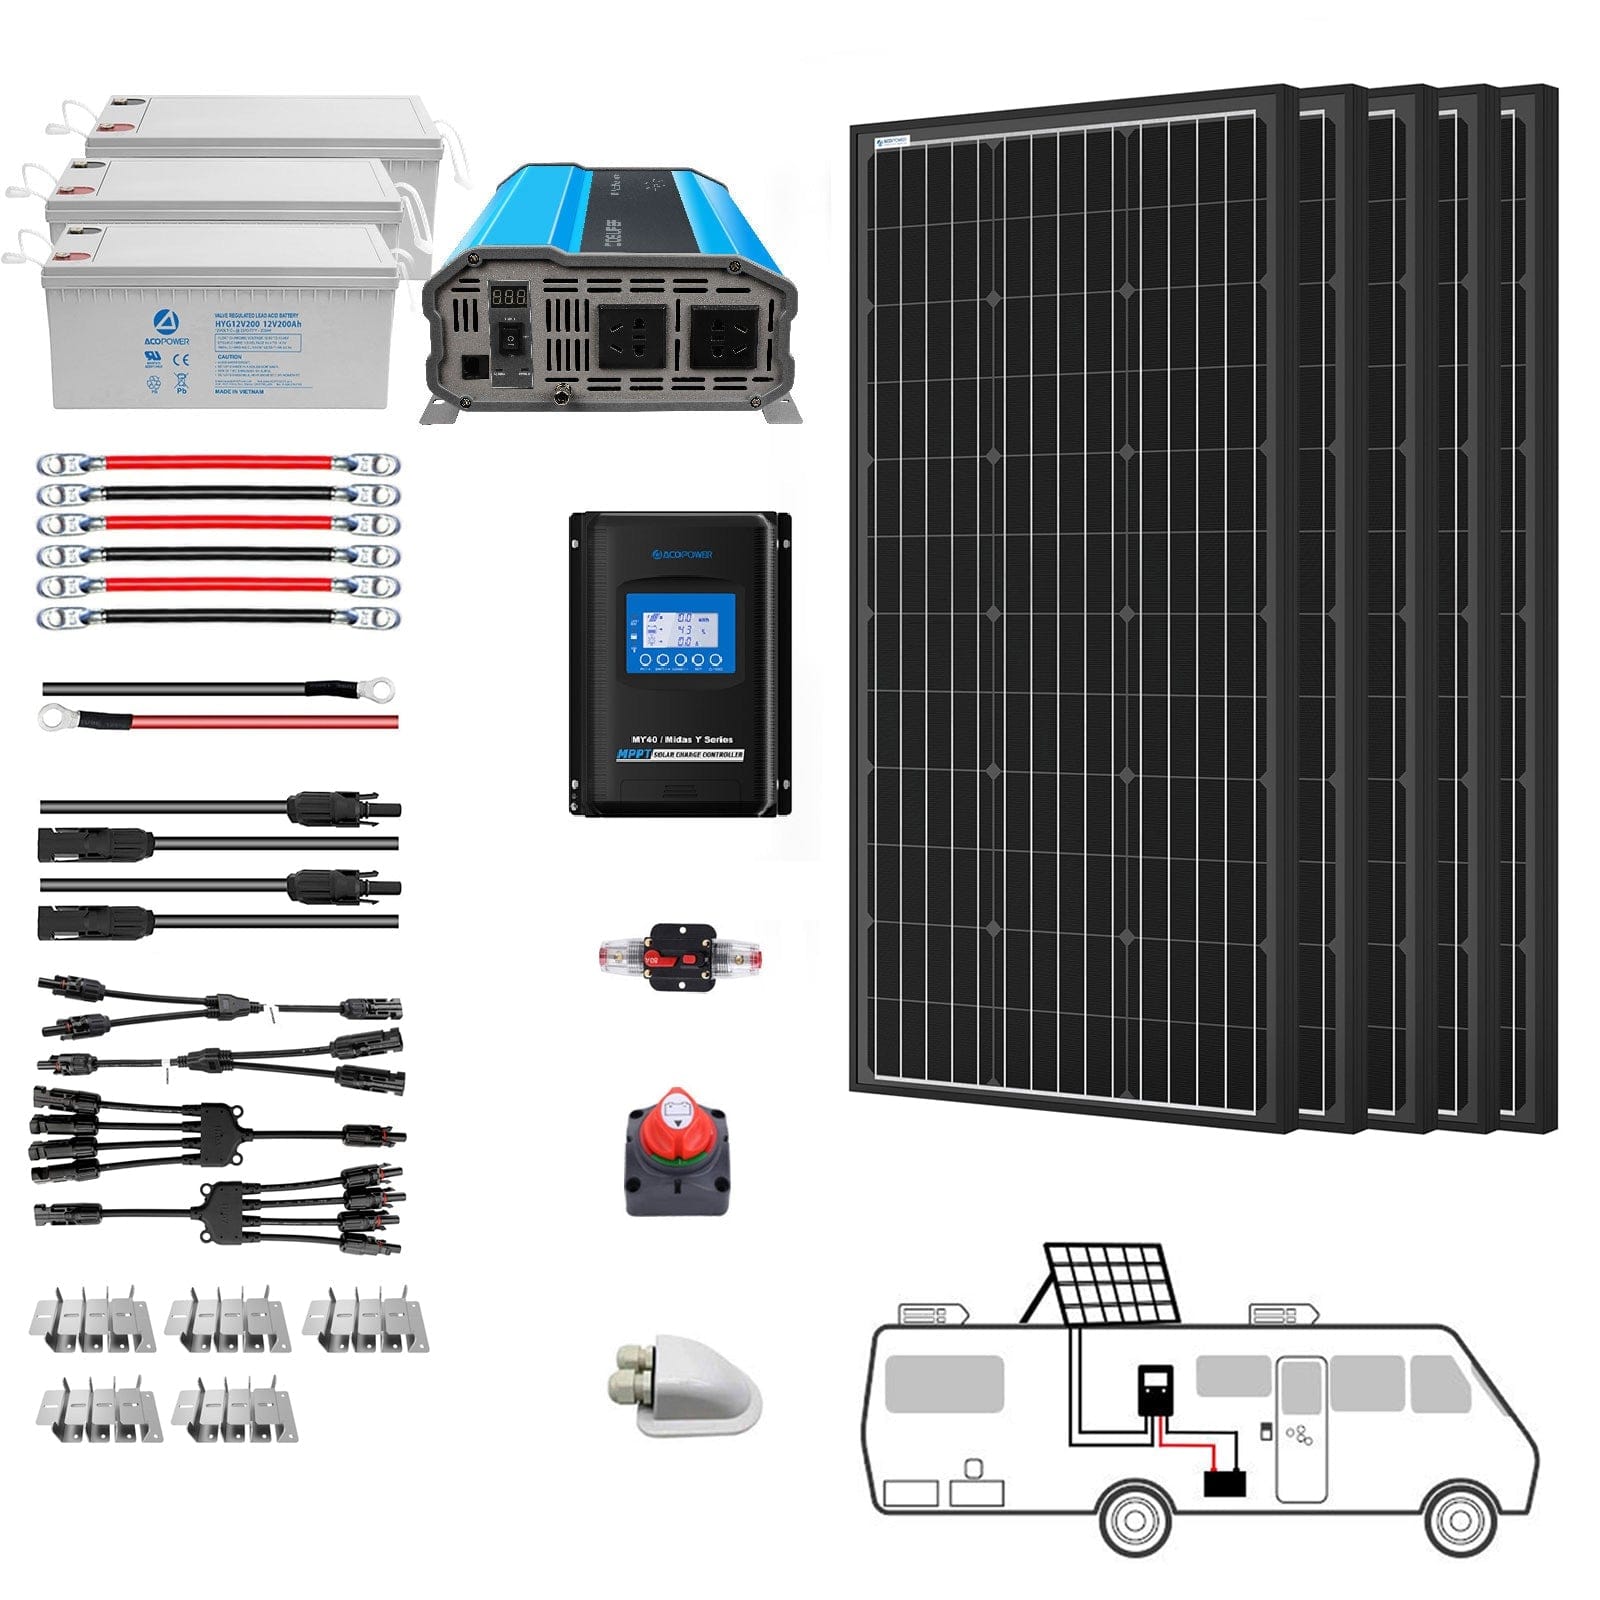 Acopower 500W Monocrystalline RV Solar Power System